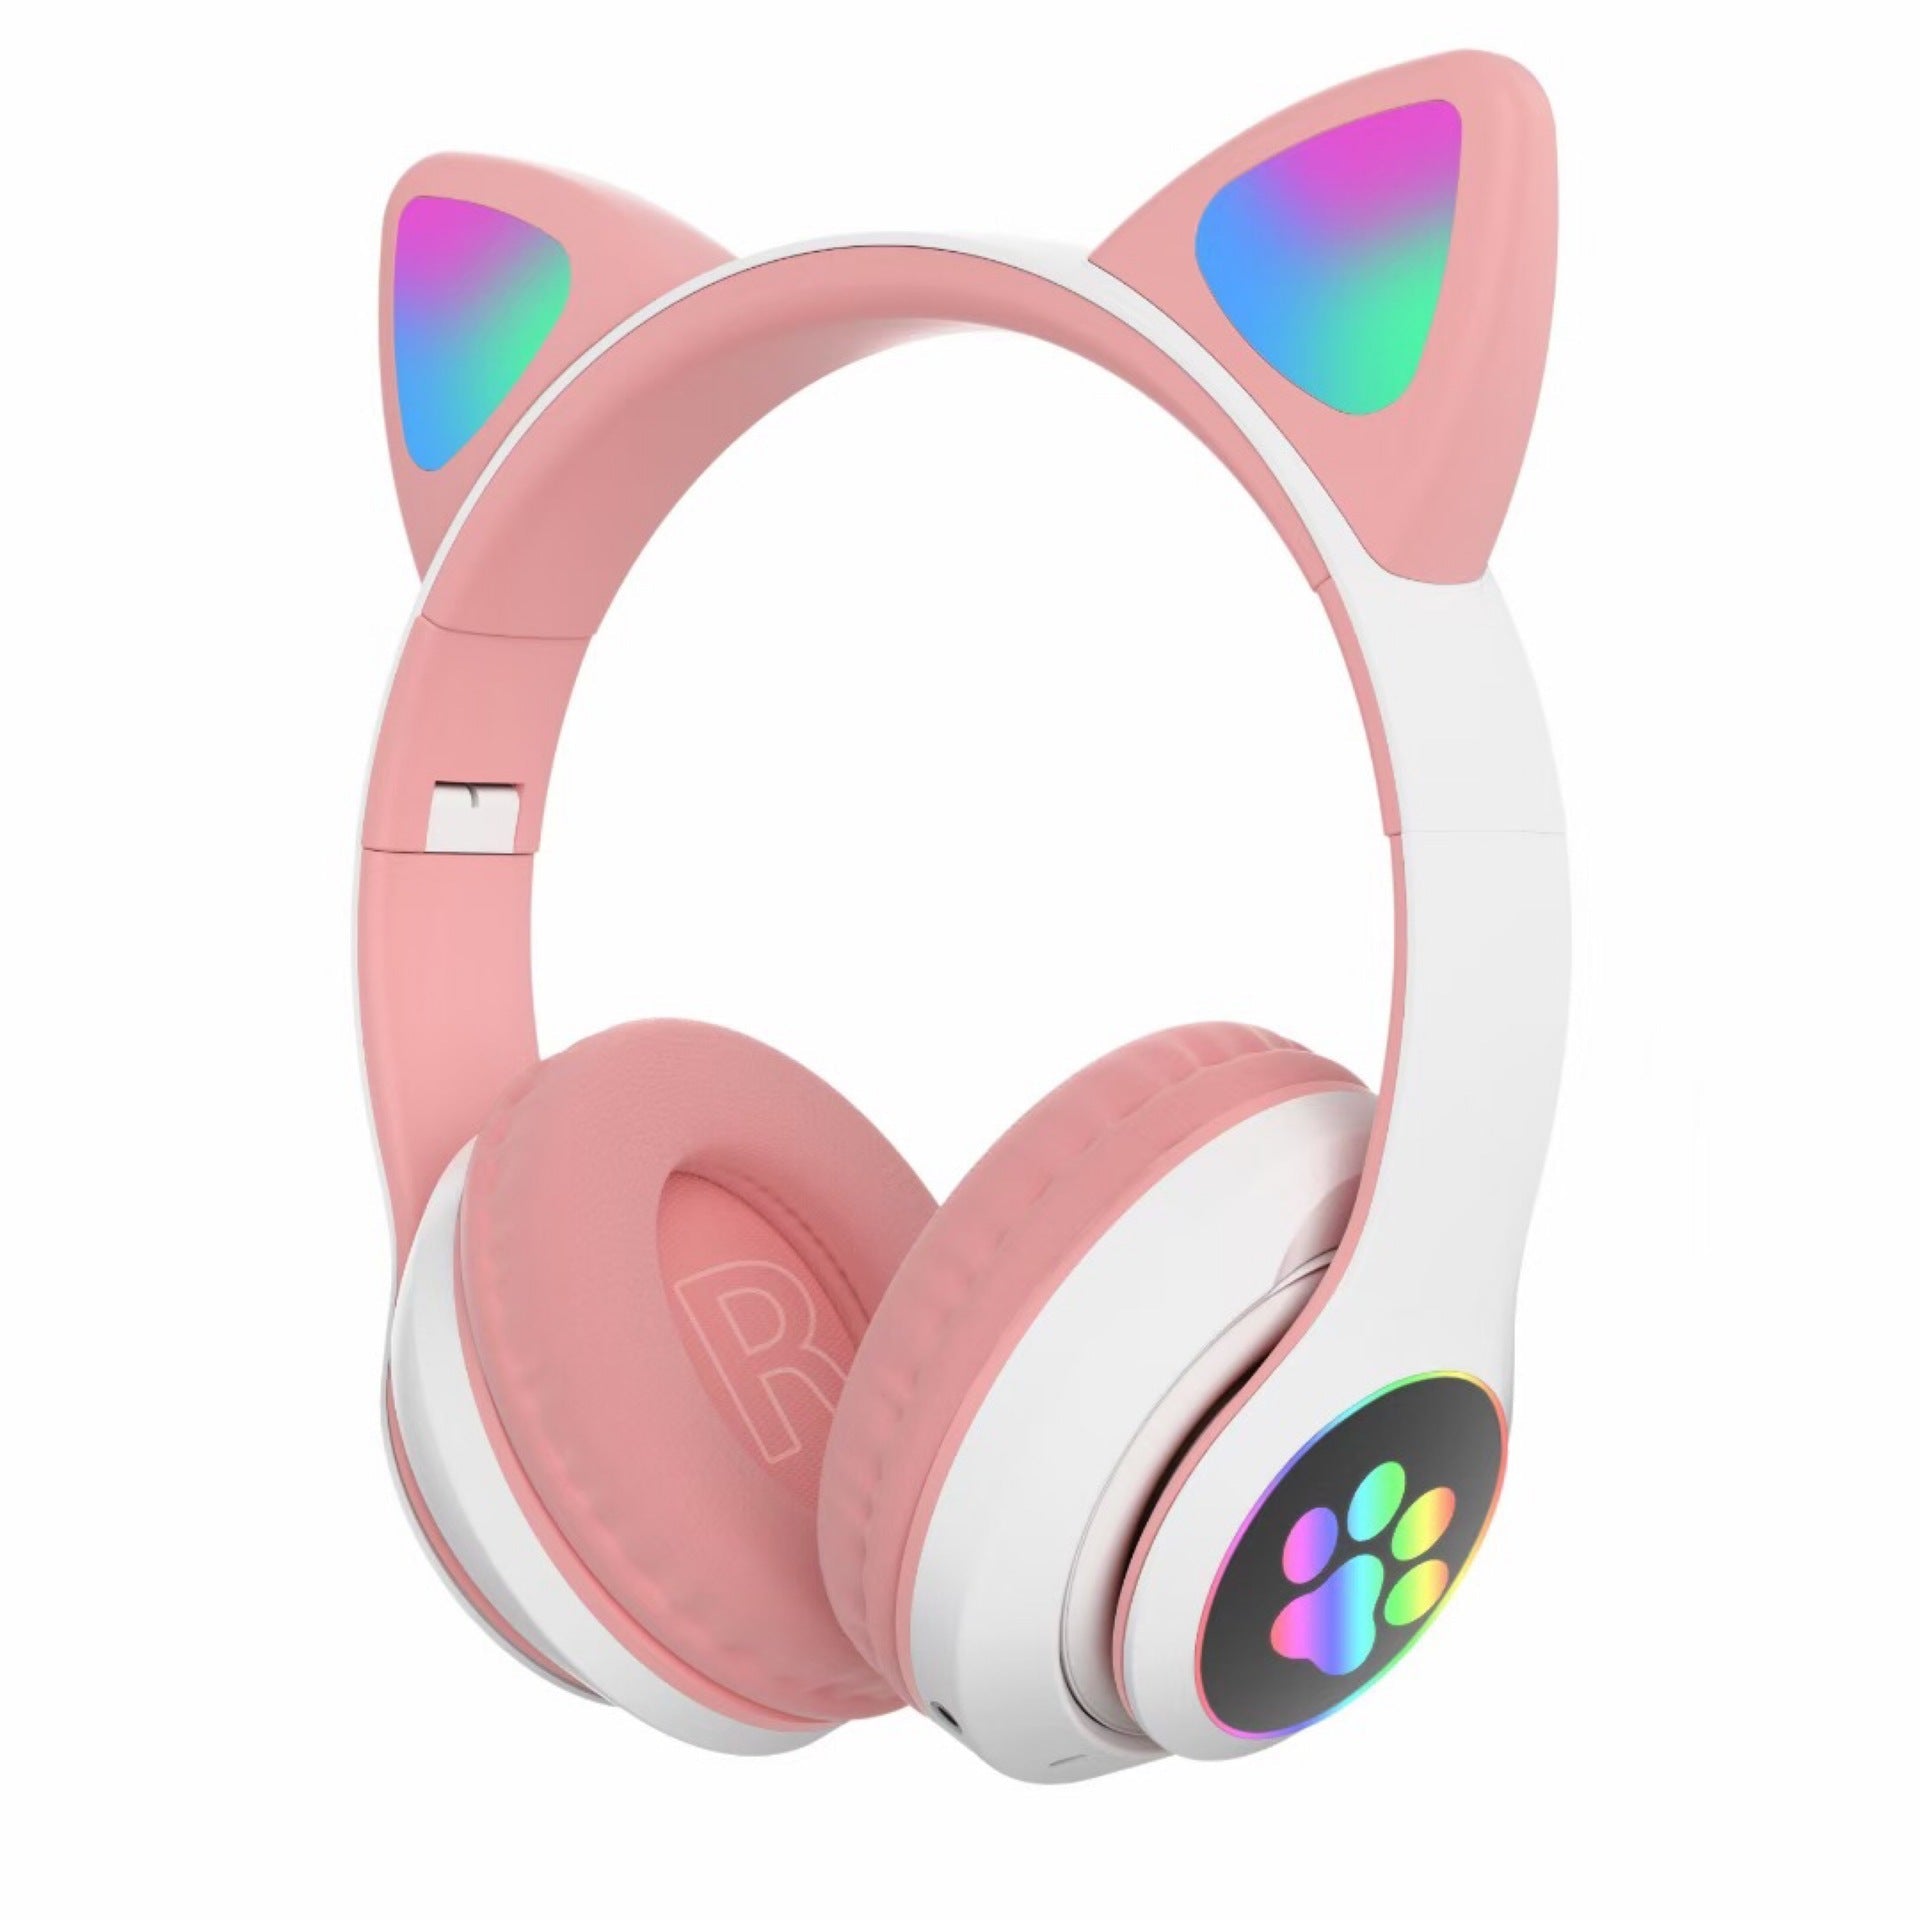 Headset wireless Bluetooth cat ear headset LED luminous plug-in card folding e-sports game headset